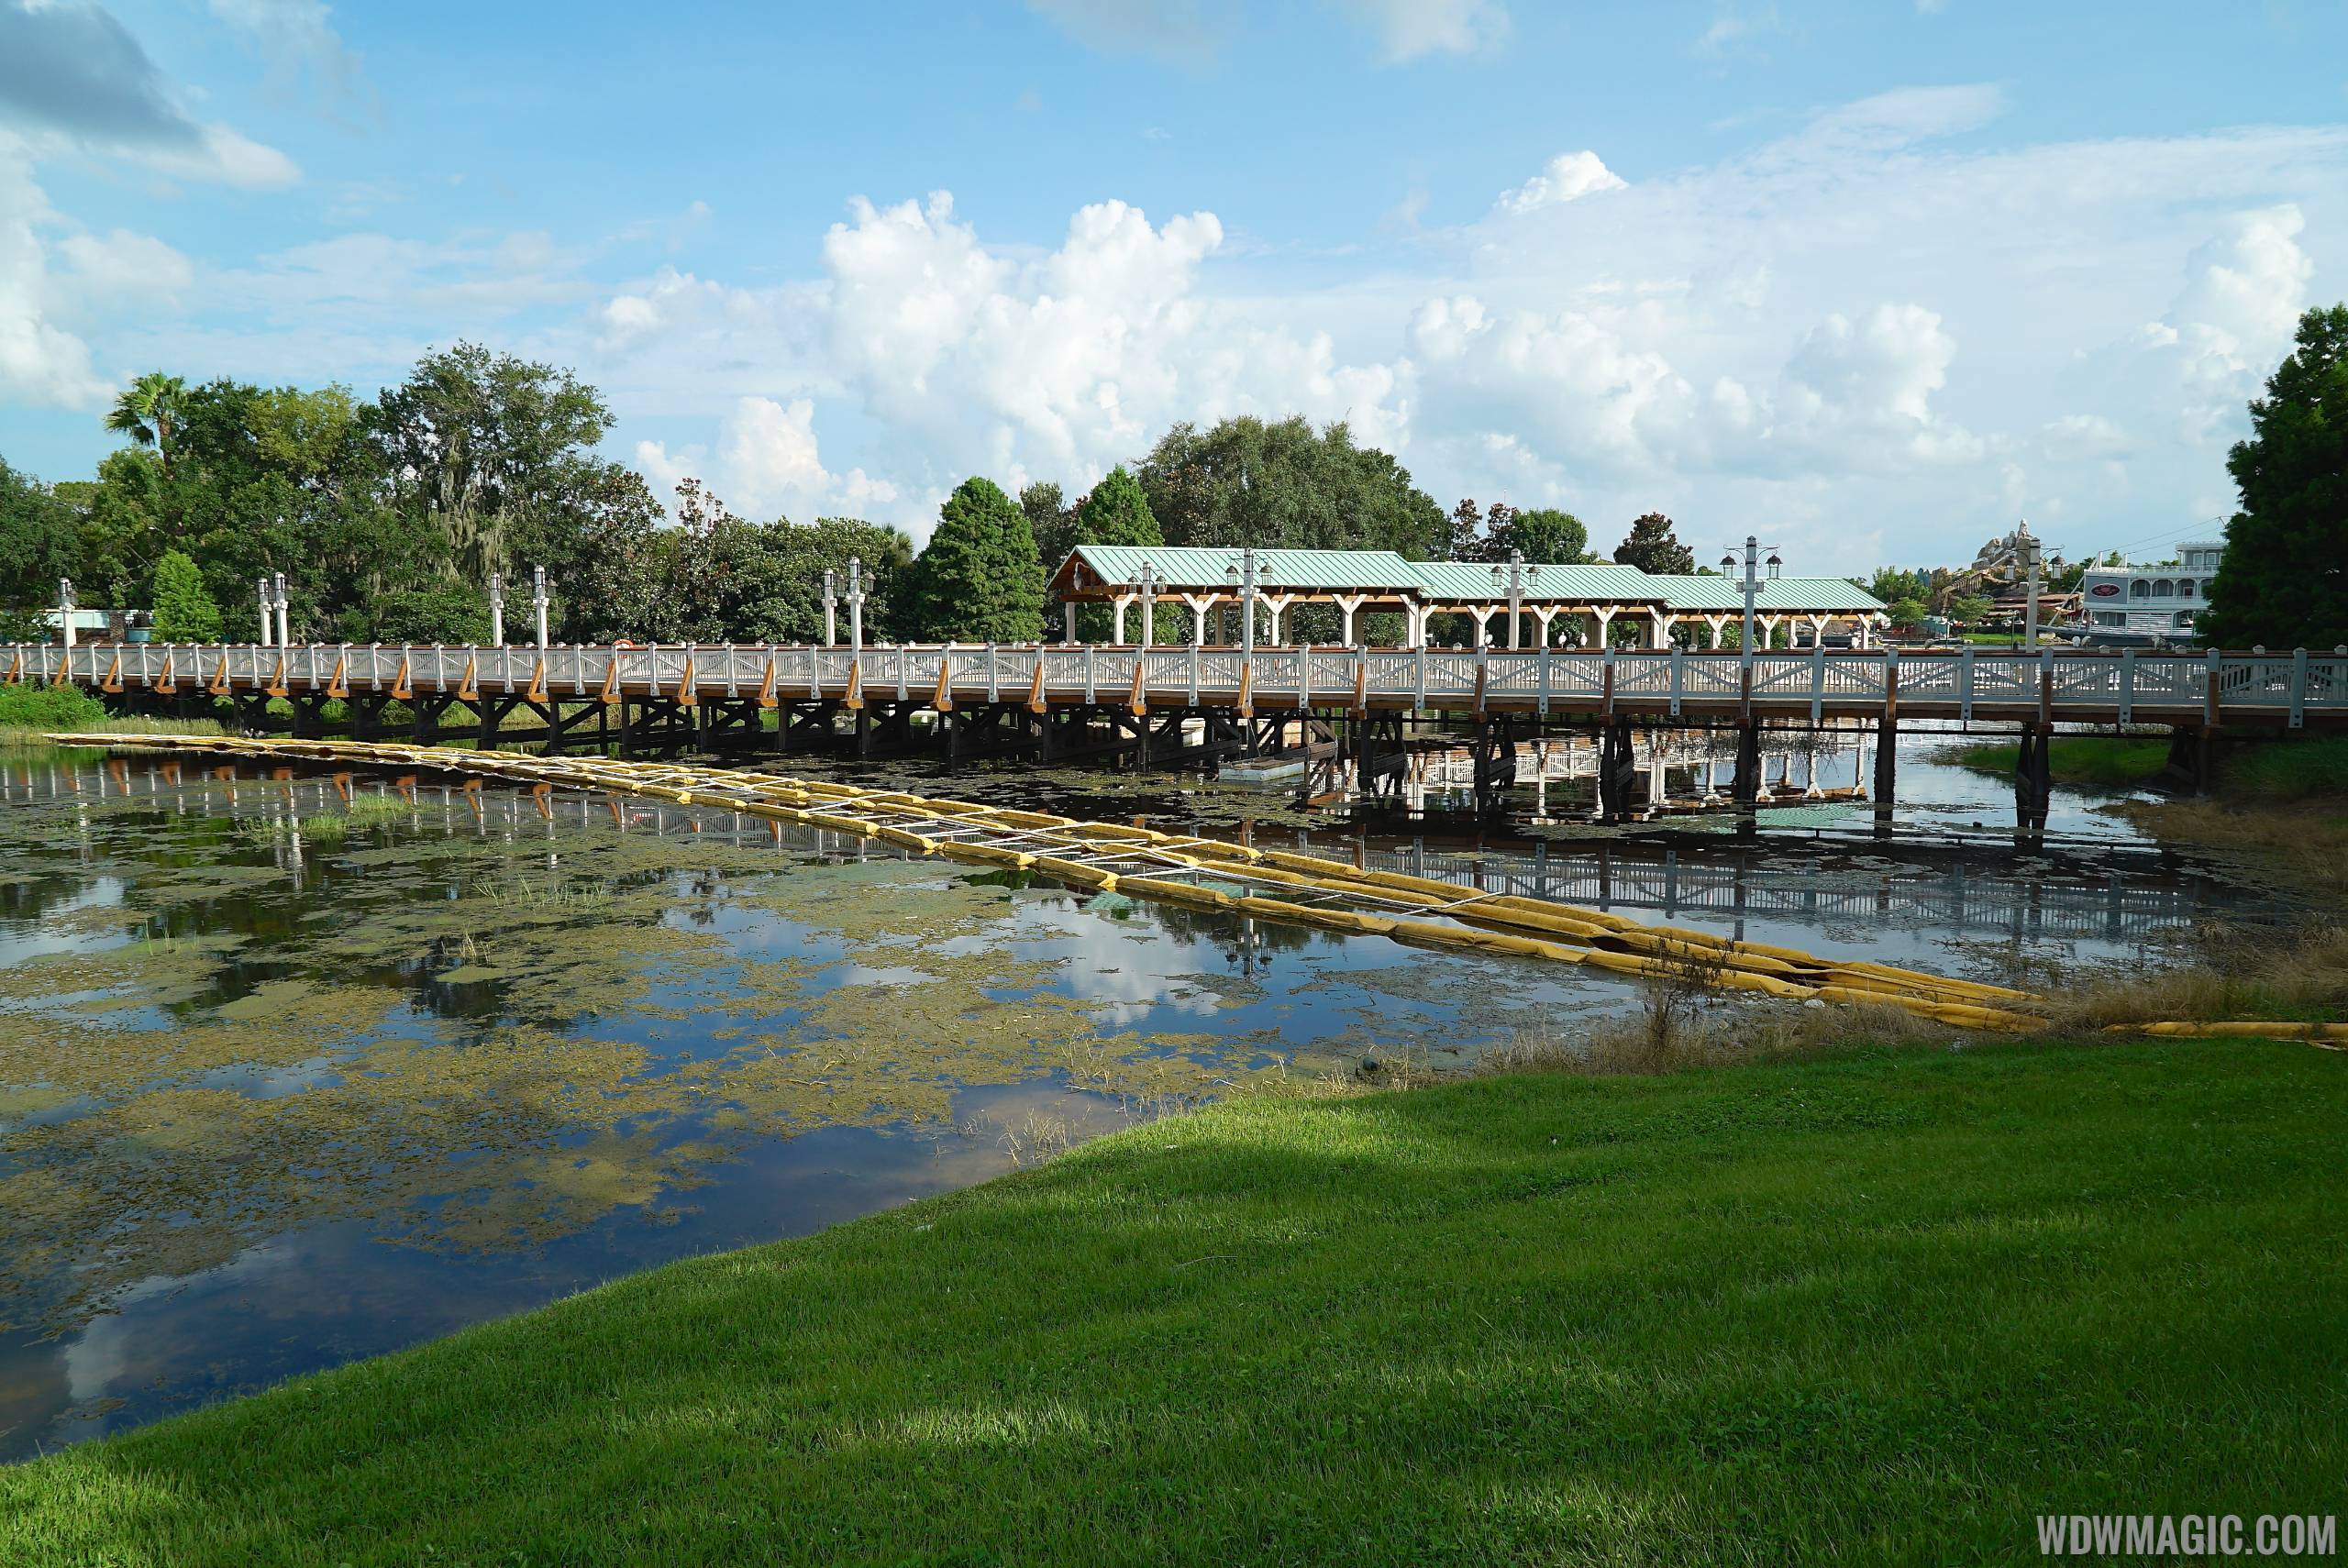 New Disney Springs Marketplace boat dock and bridge to Saratoga Spring